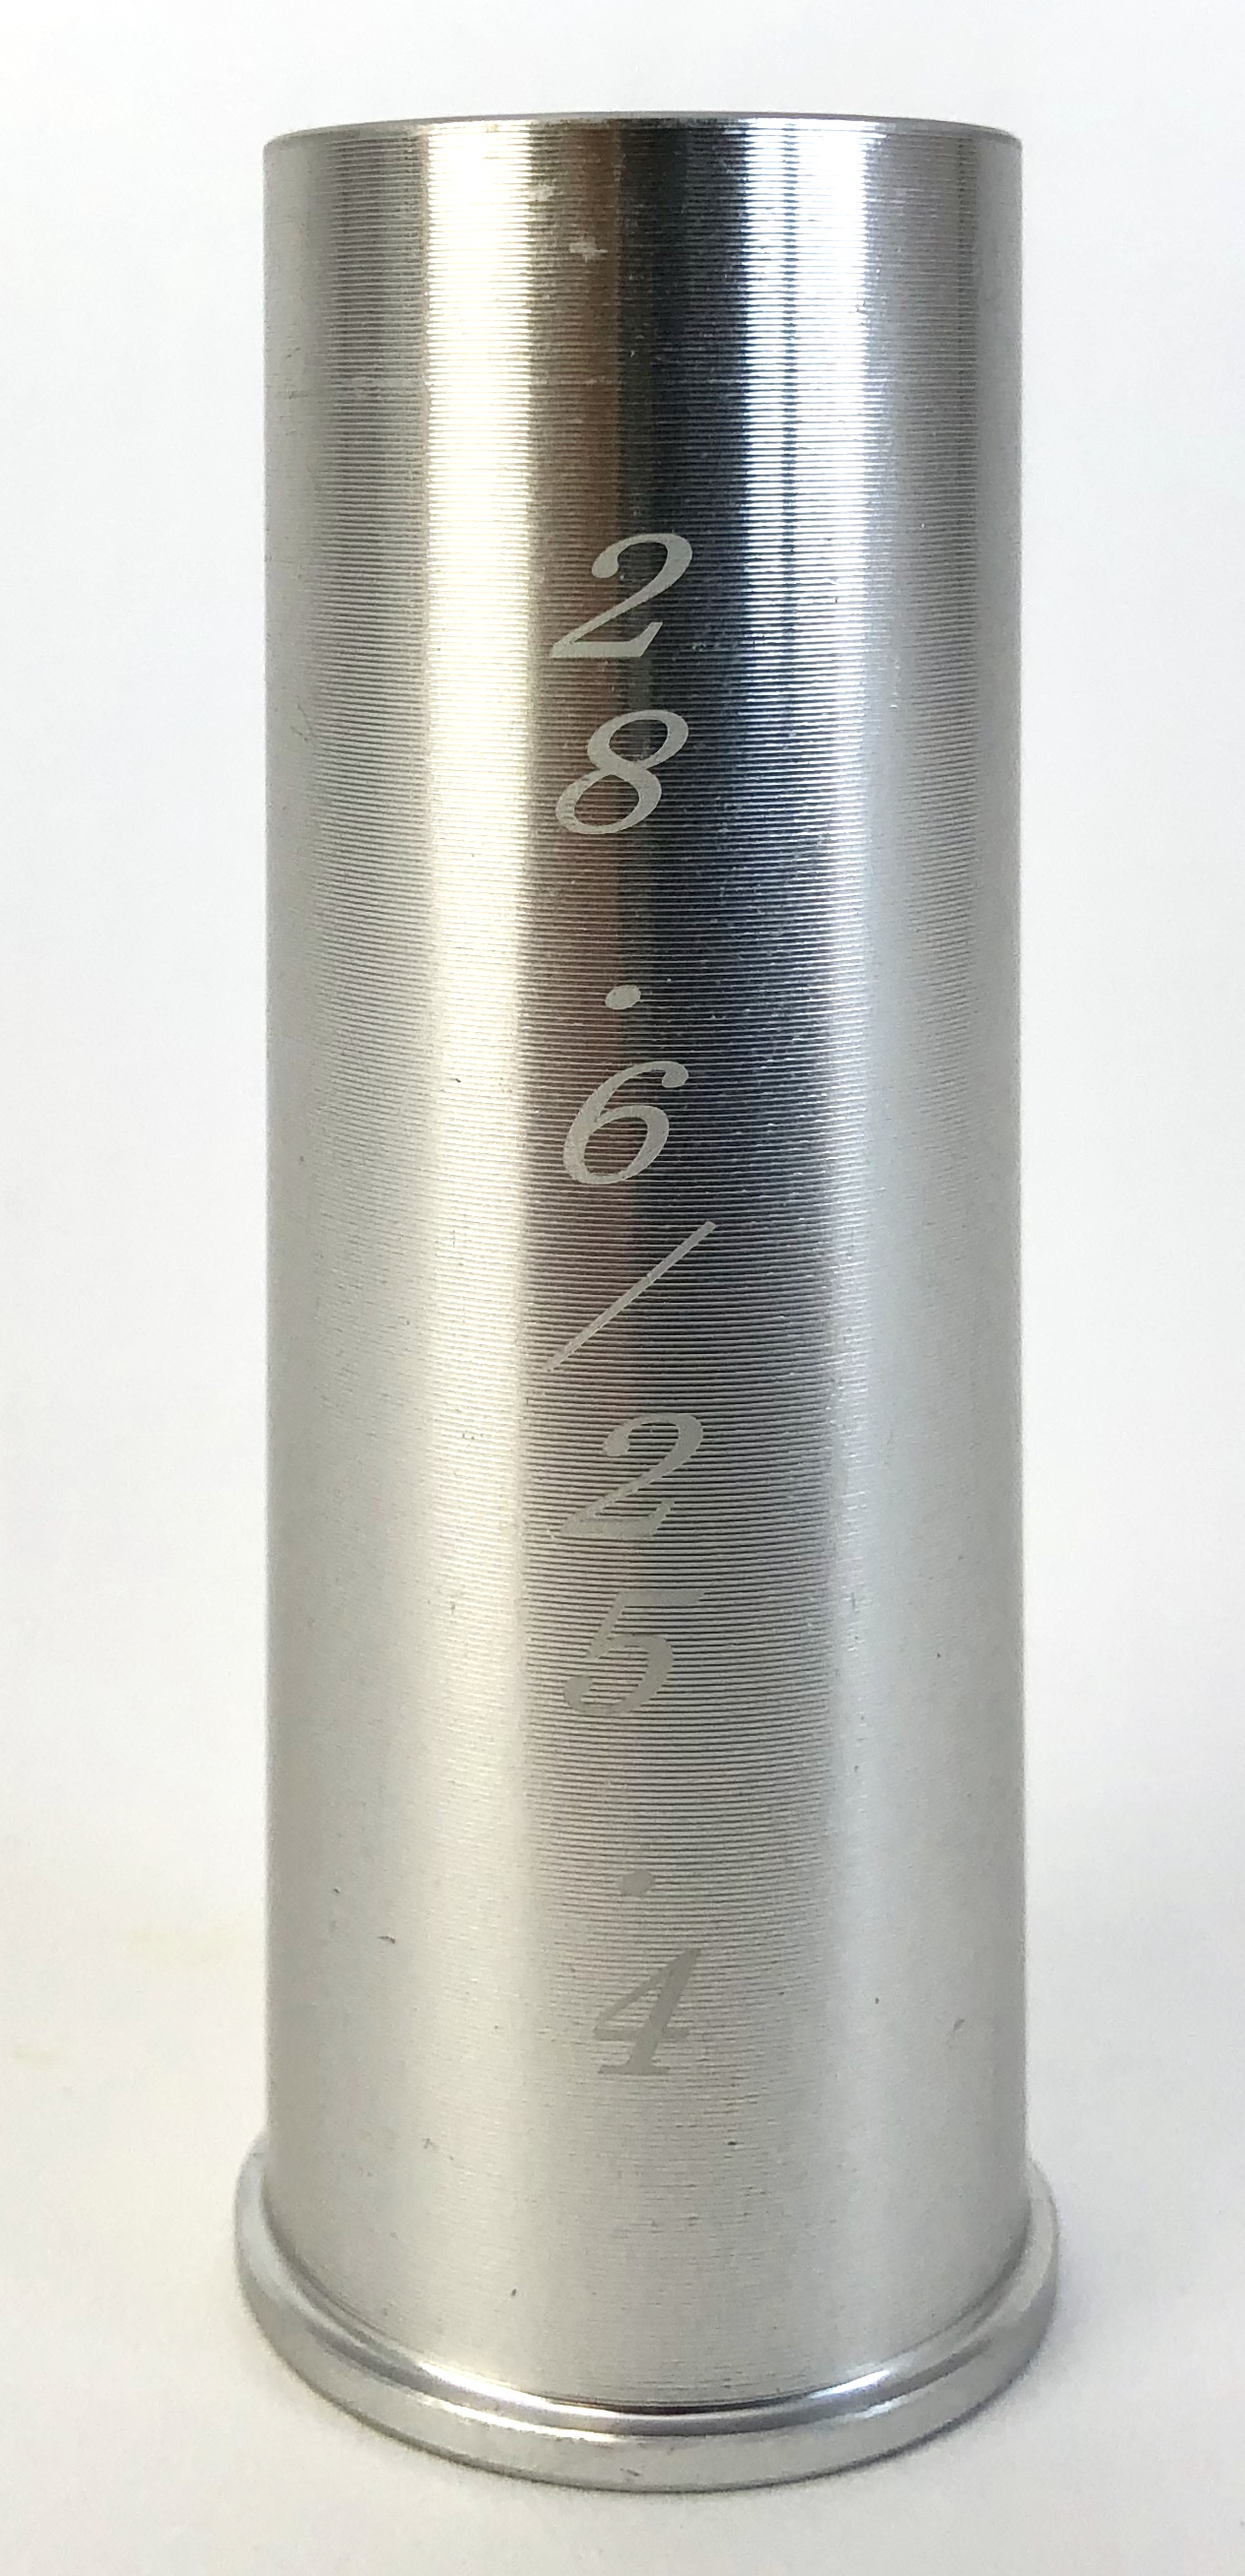 Complemento para tija del sillín / reductor 25,4 mm (1 pulgada) a 28,6 mm (1 1/8 pulgadas)